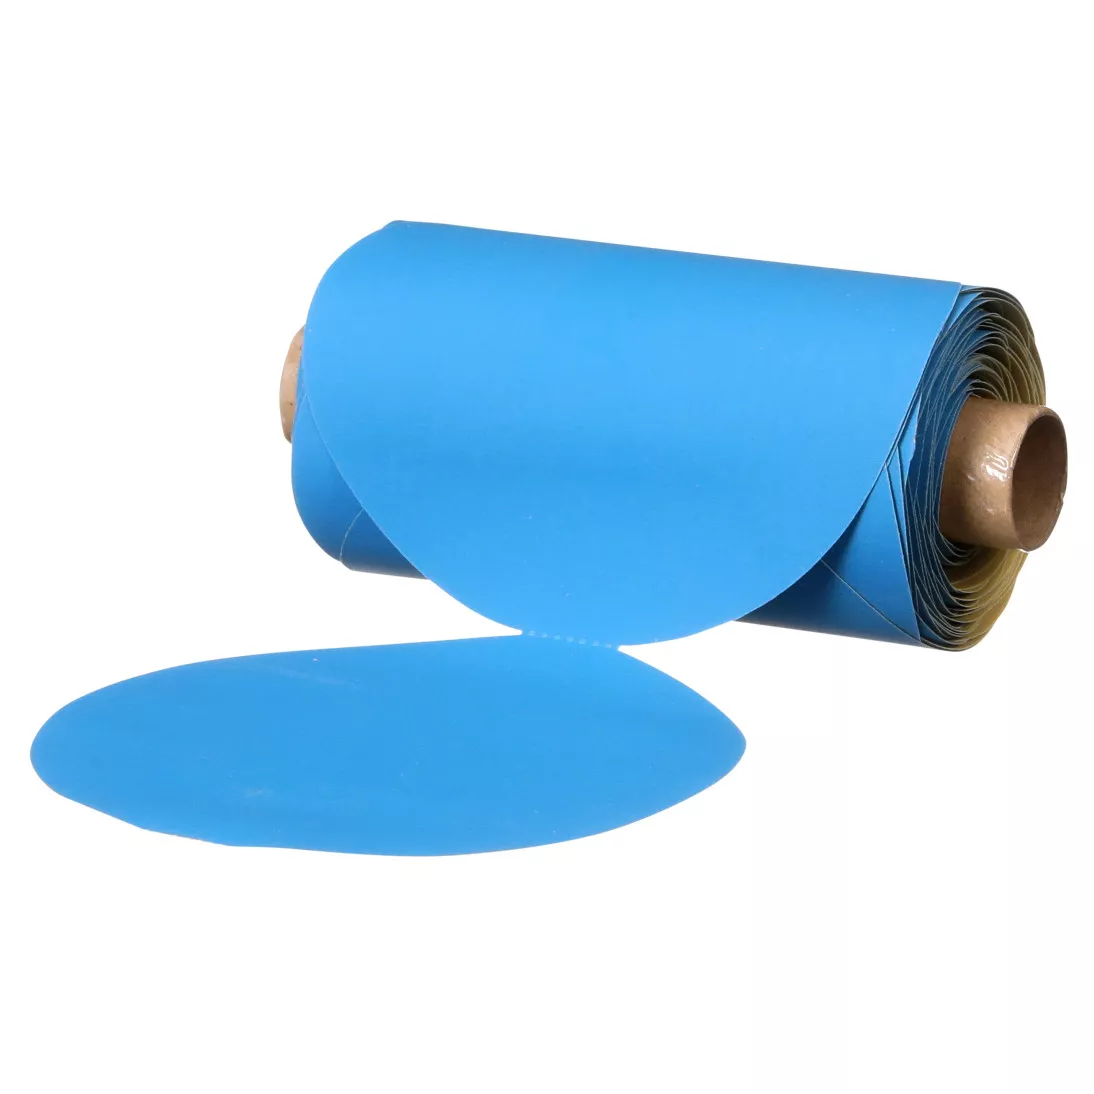 3M™ Stikit™ Blue Abrasive Disc Roll, 36272, 5 in, 400 grade, No Hole, 100 discs per roll, 5 rolls per case